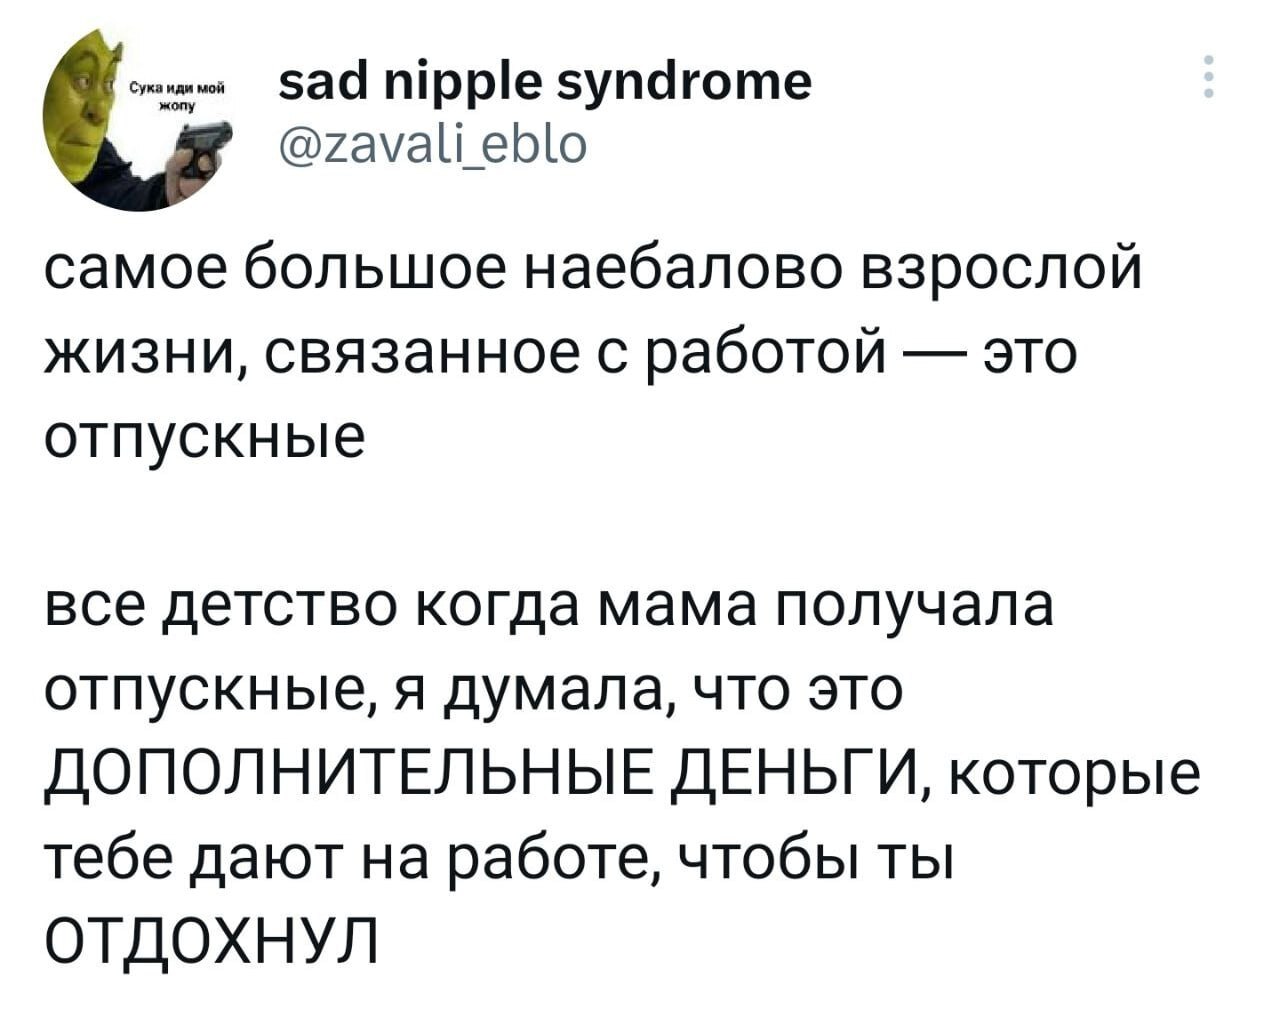 Sad nipple syndrome